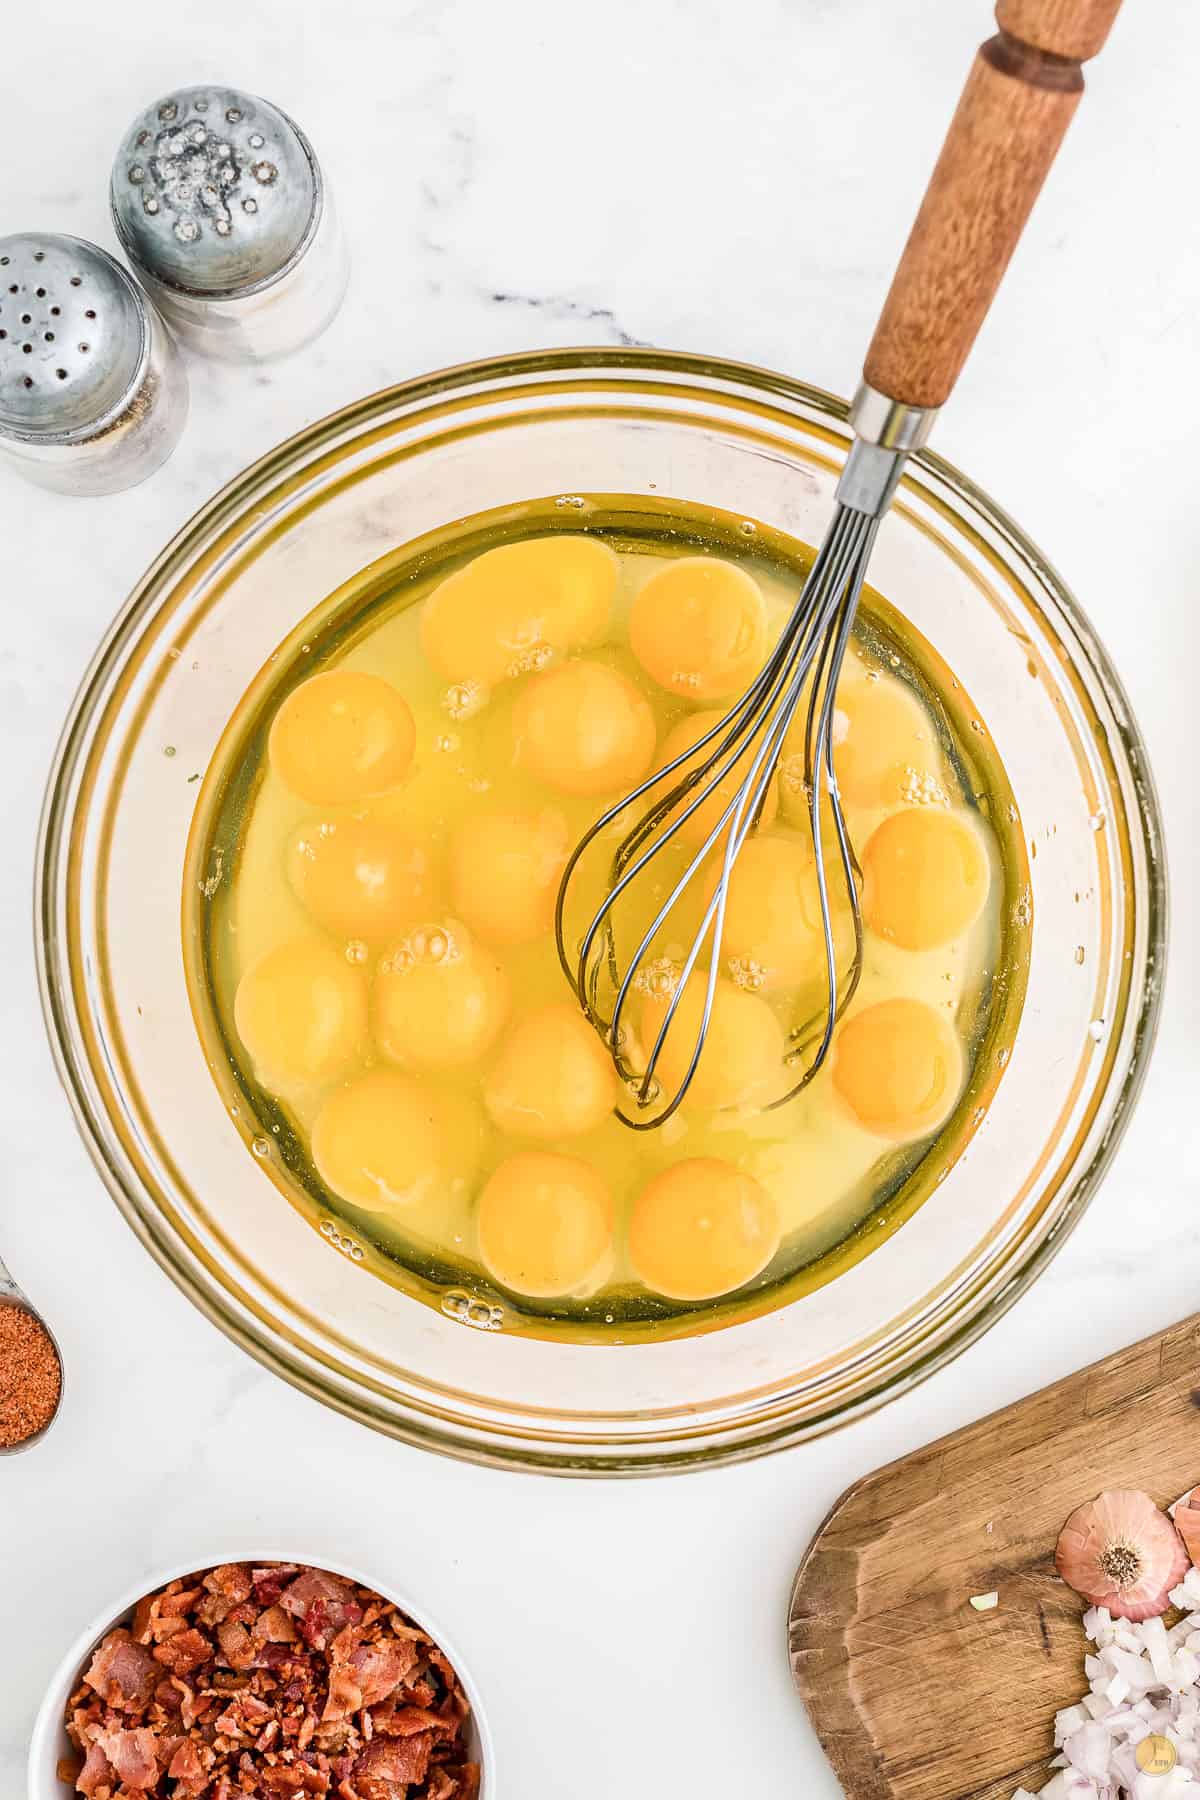 bowl of eggs